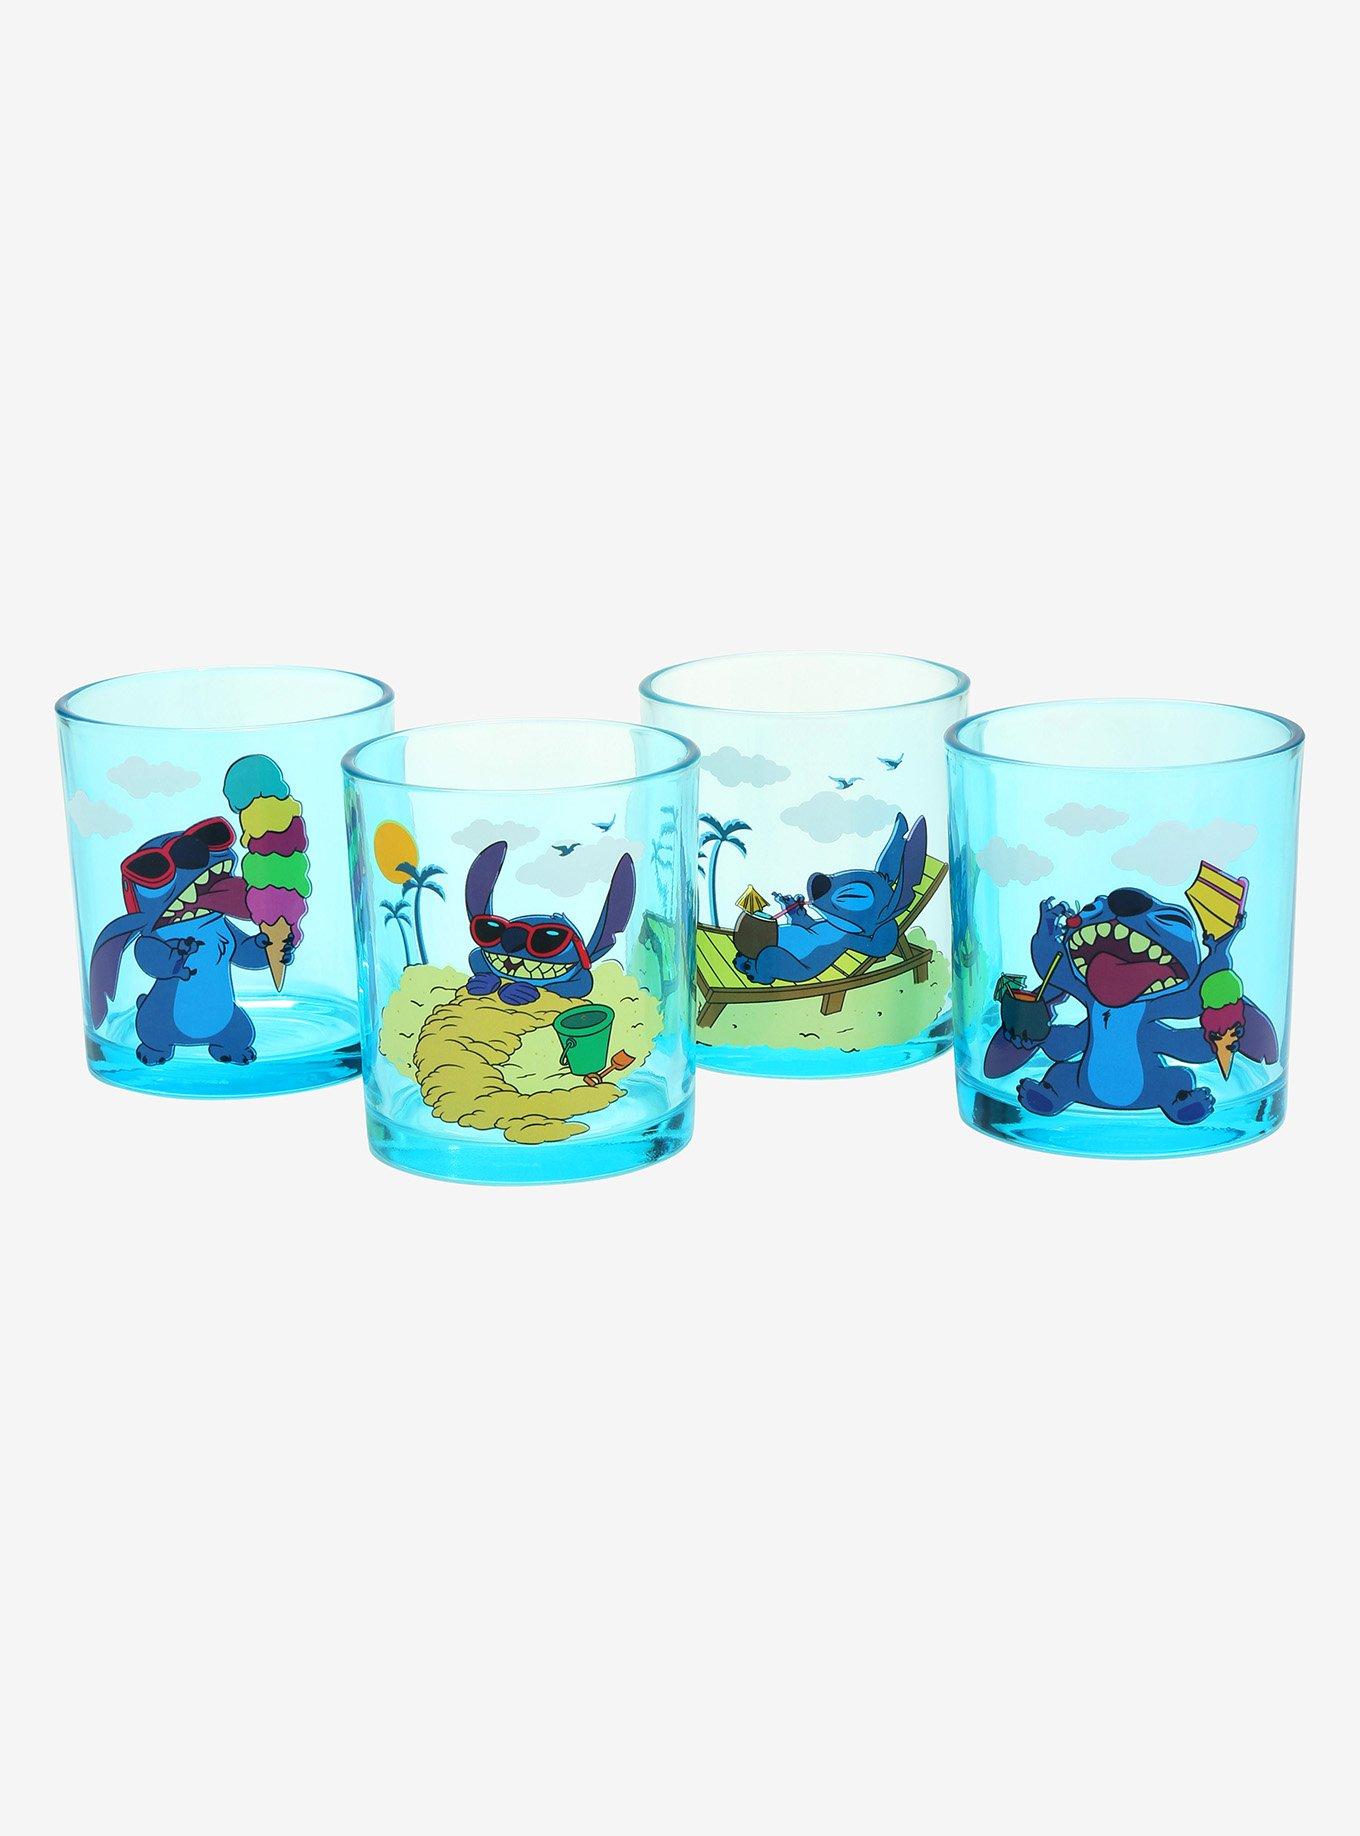 Disney Lilo & Stitch 10 Oz Glassware Set of 4 Glasses